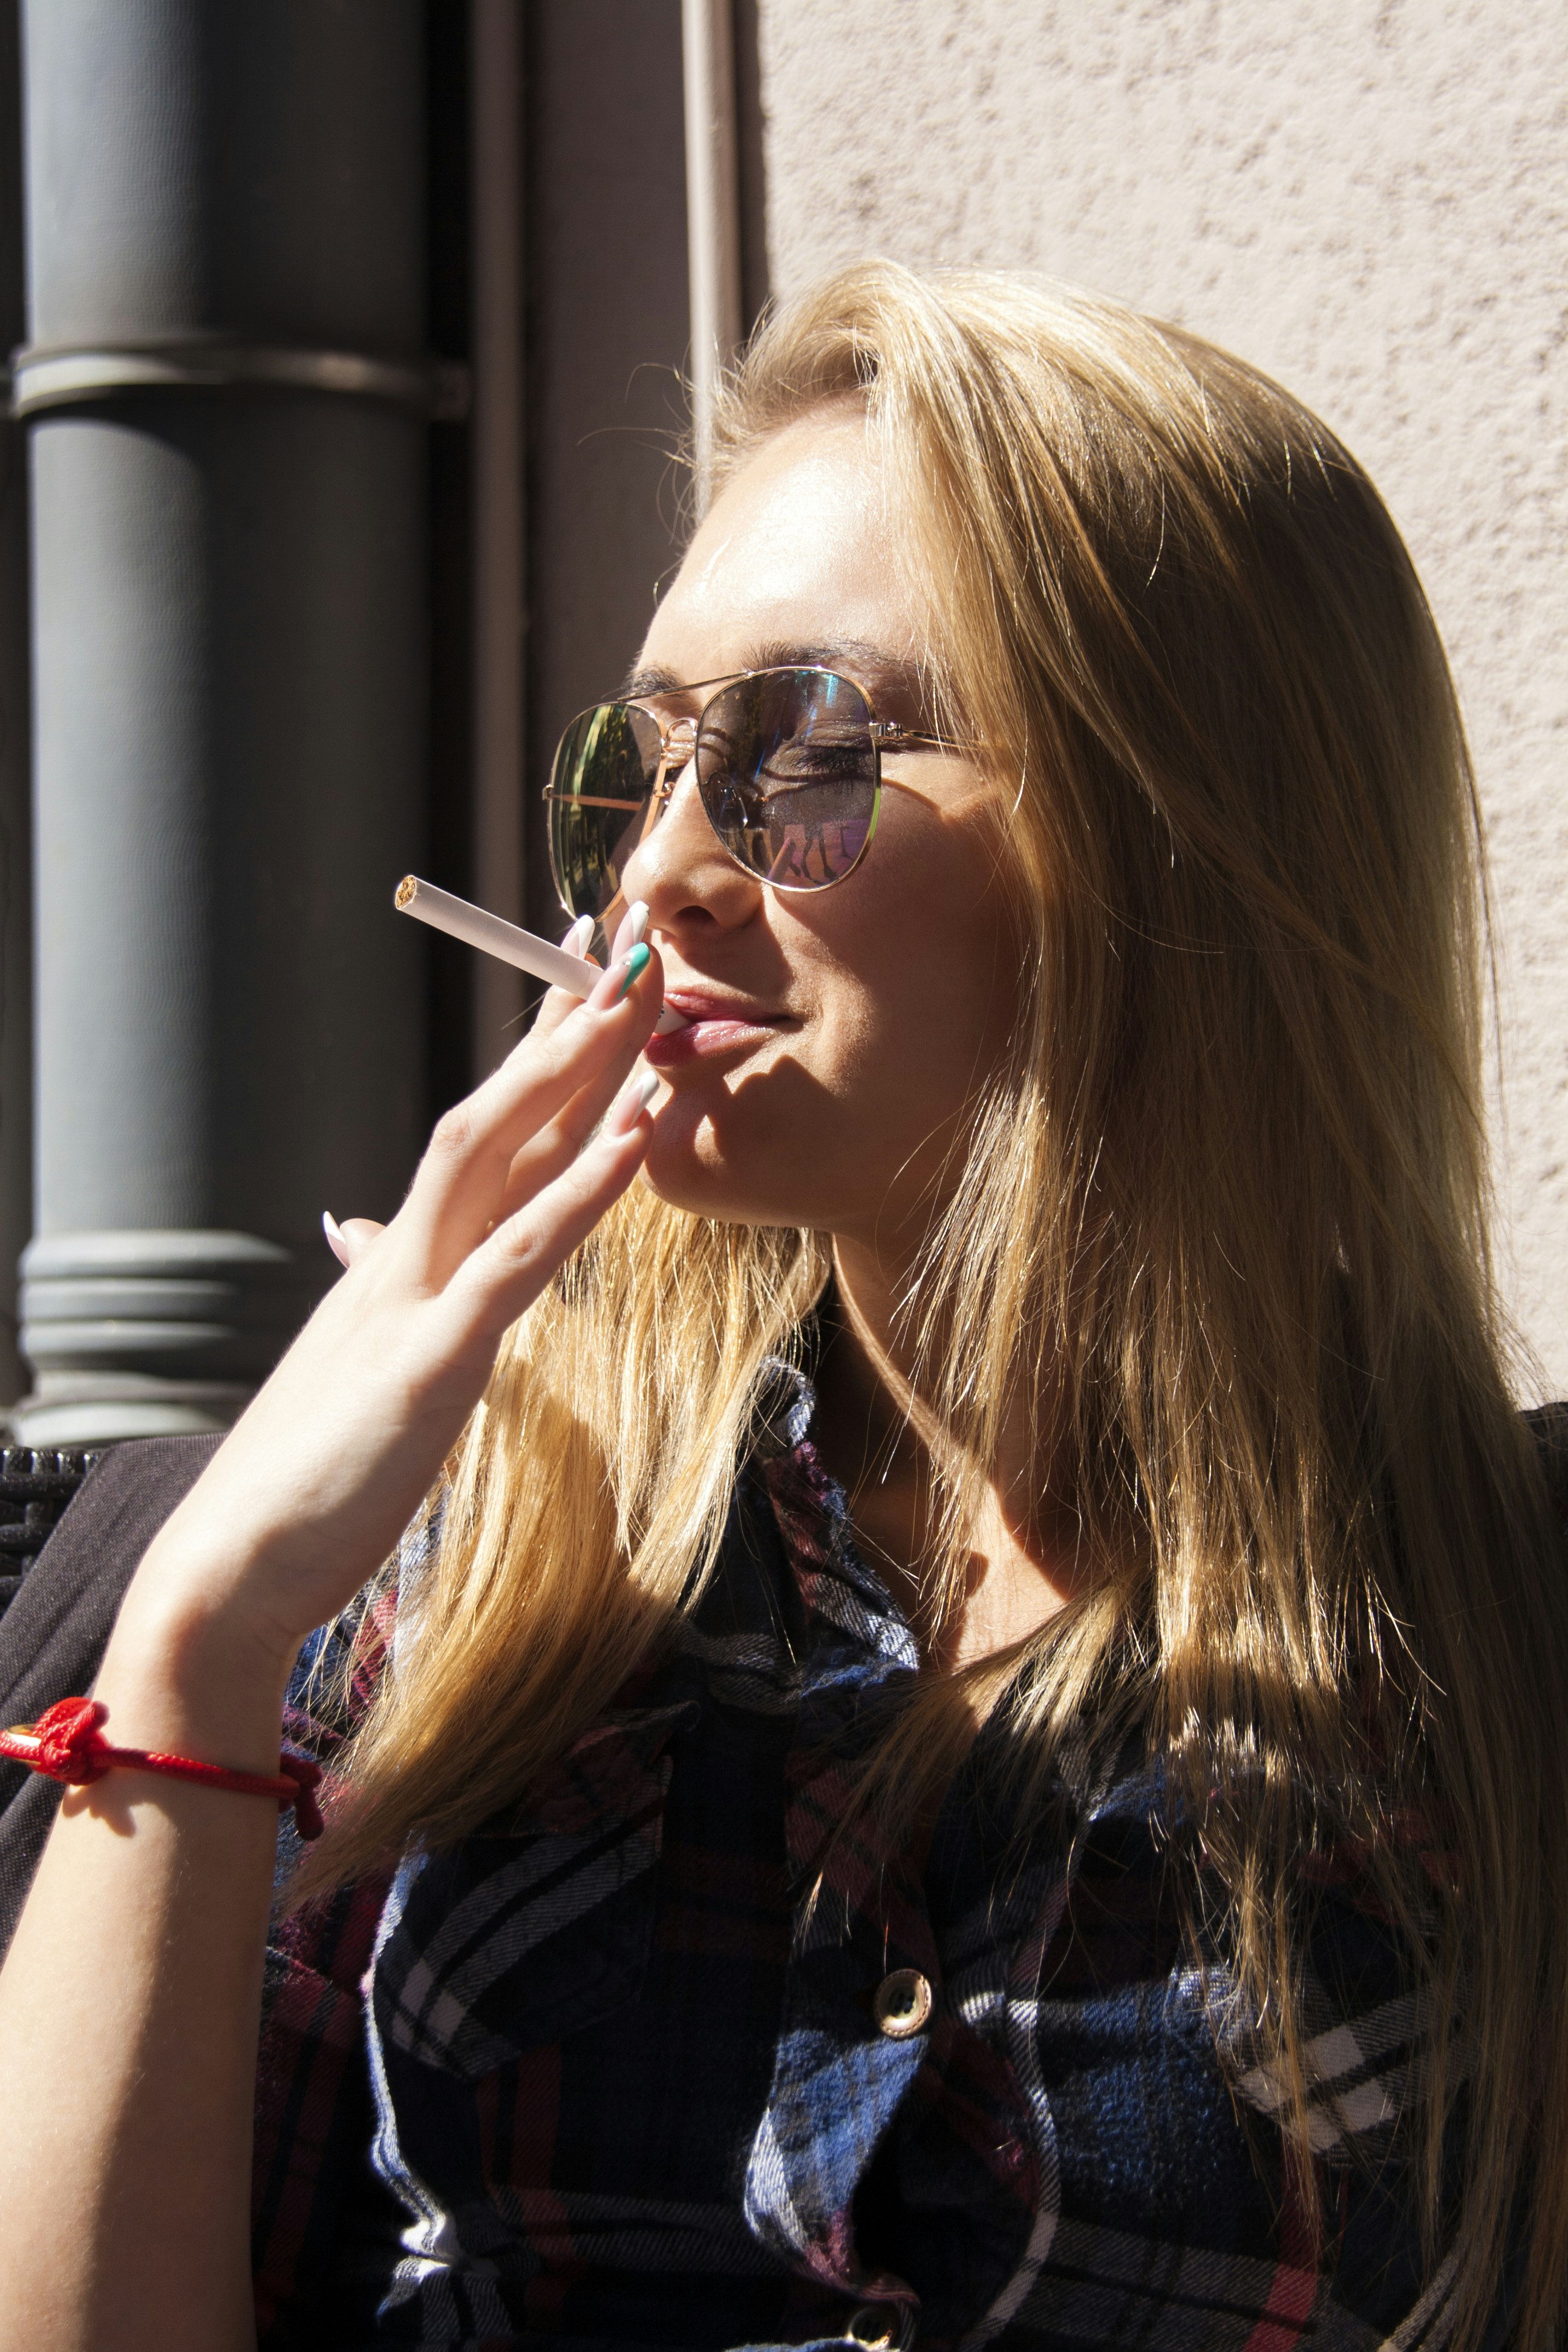 Best of Pretty girls smoking cigarettes